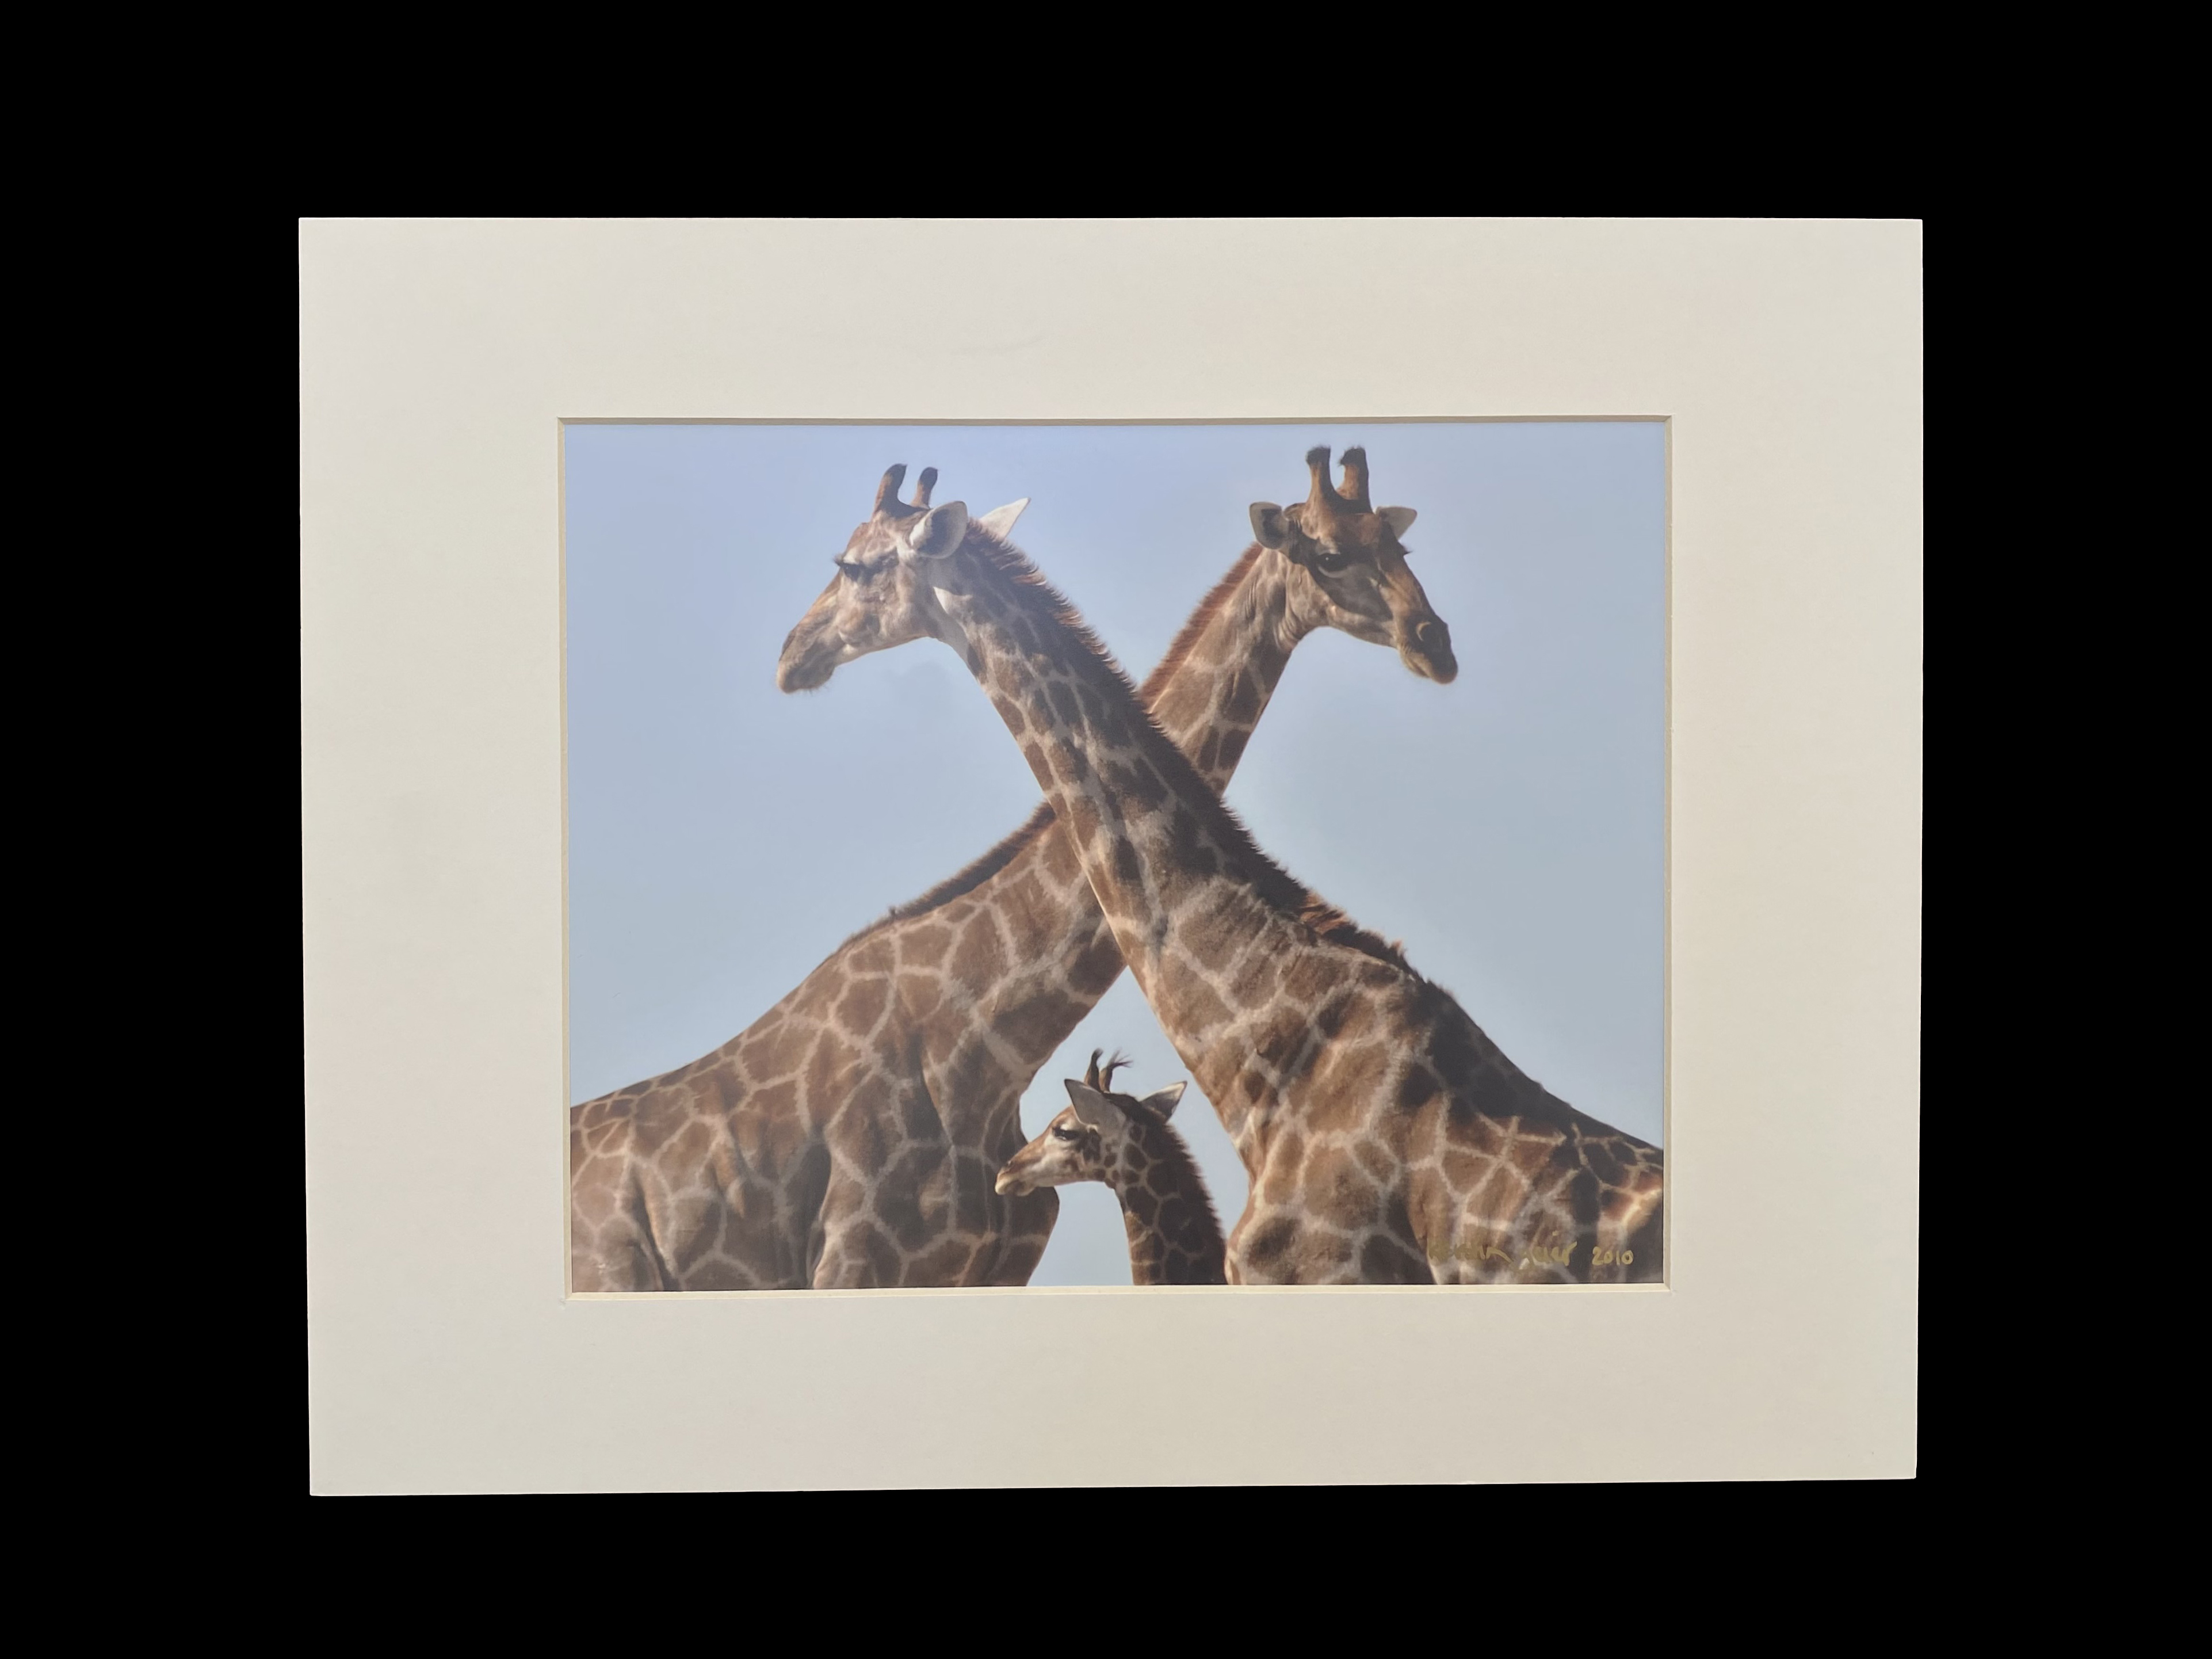 Photograph by Kerstin Geier entitled Giraffe Threesome, Etosha Pan, Namibia